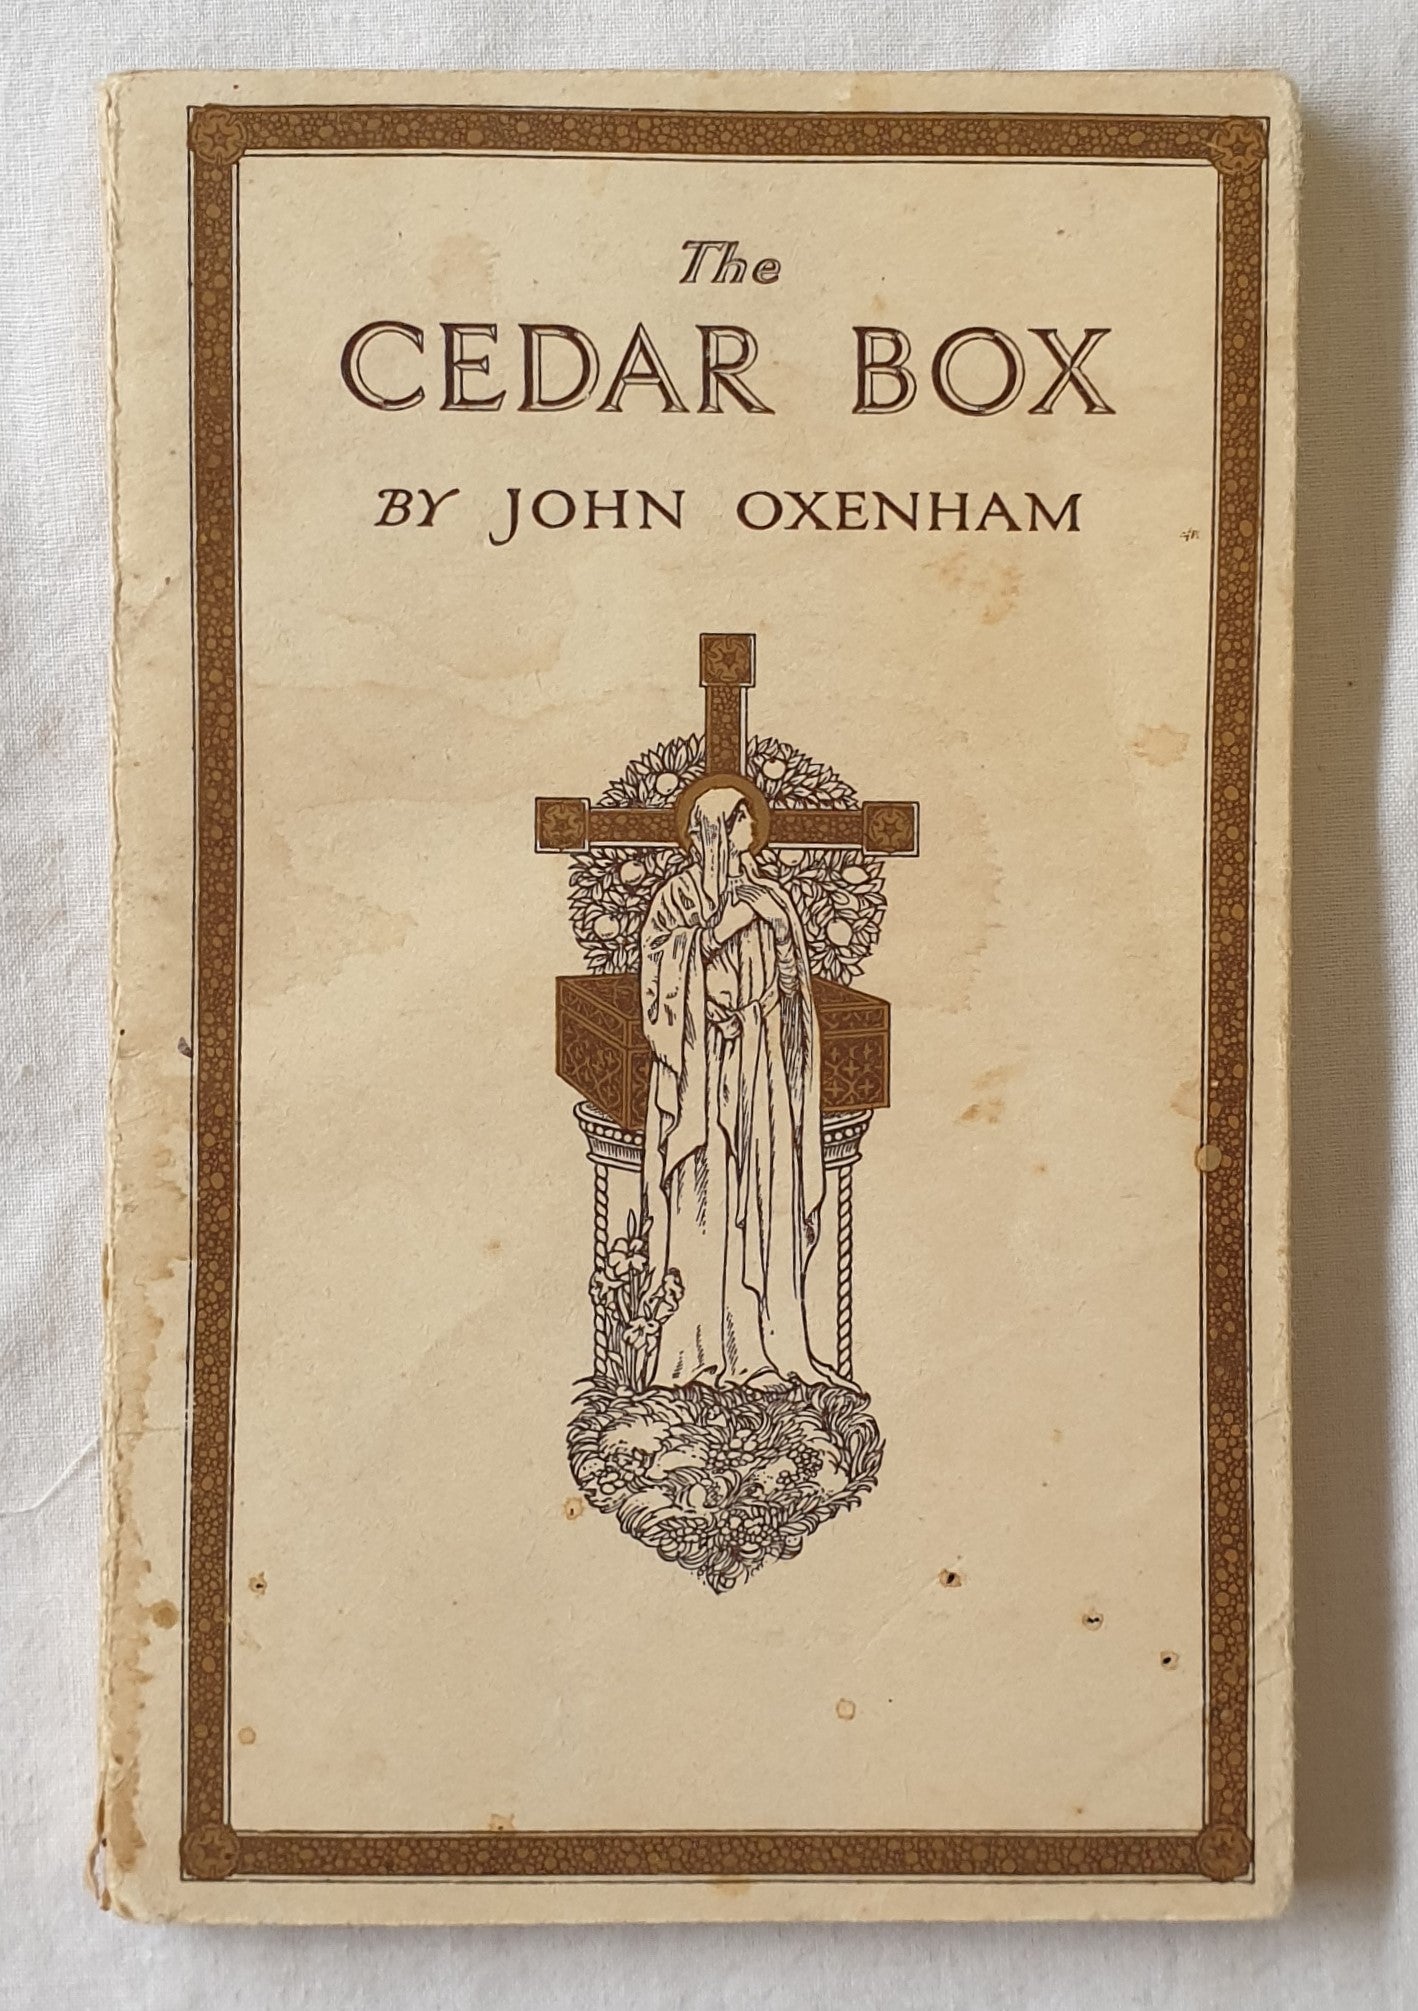 The Cedar Box by John Oxenham